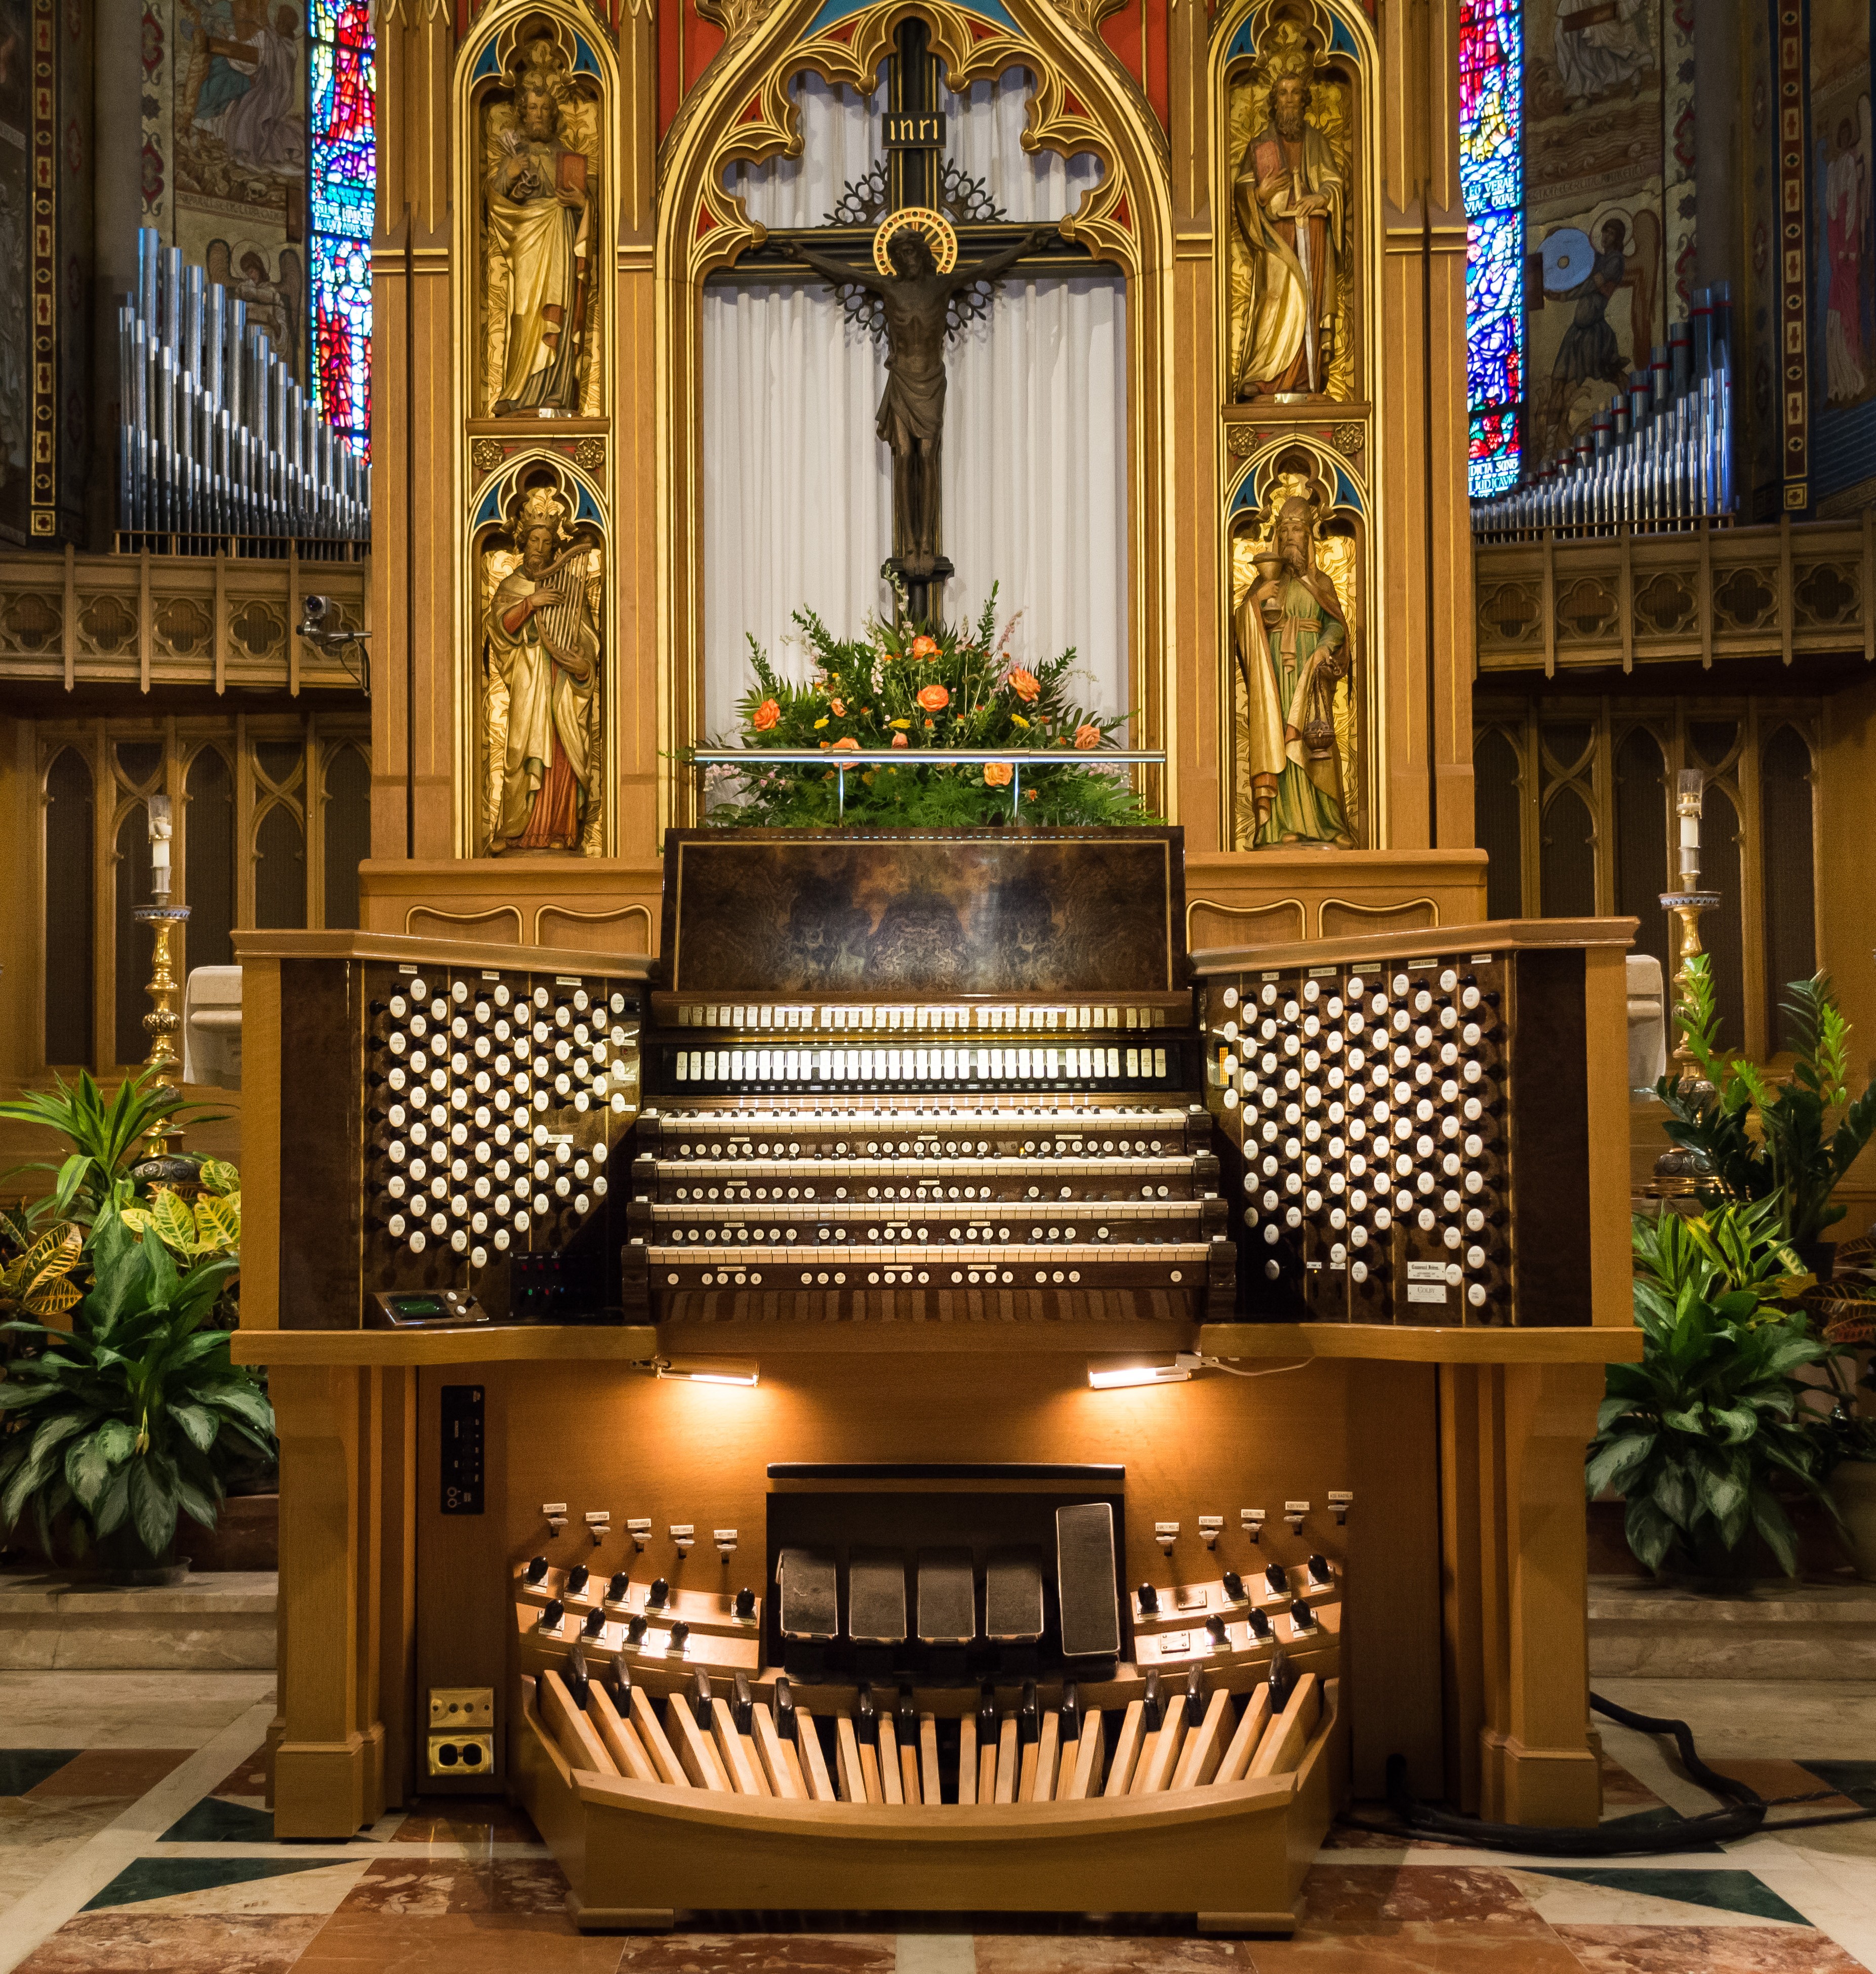 saint-bernard organ console